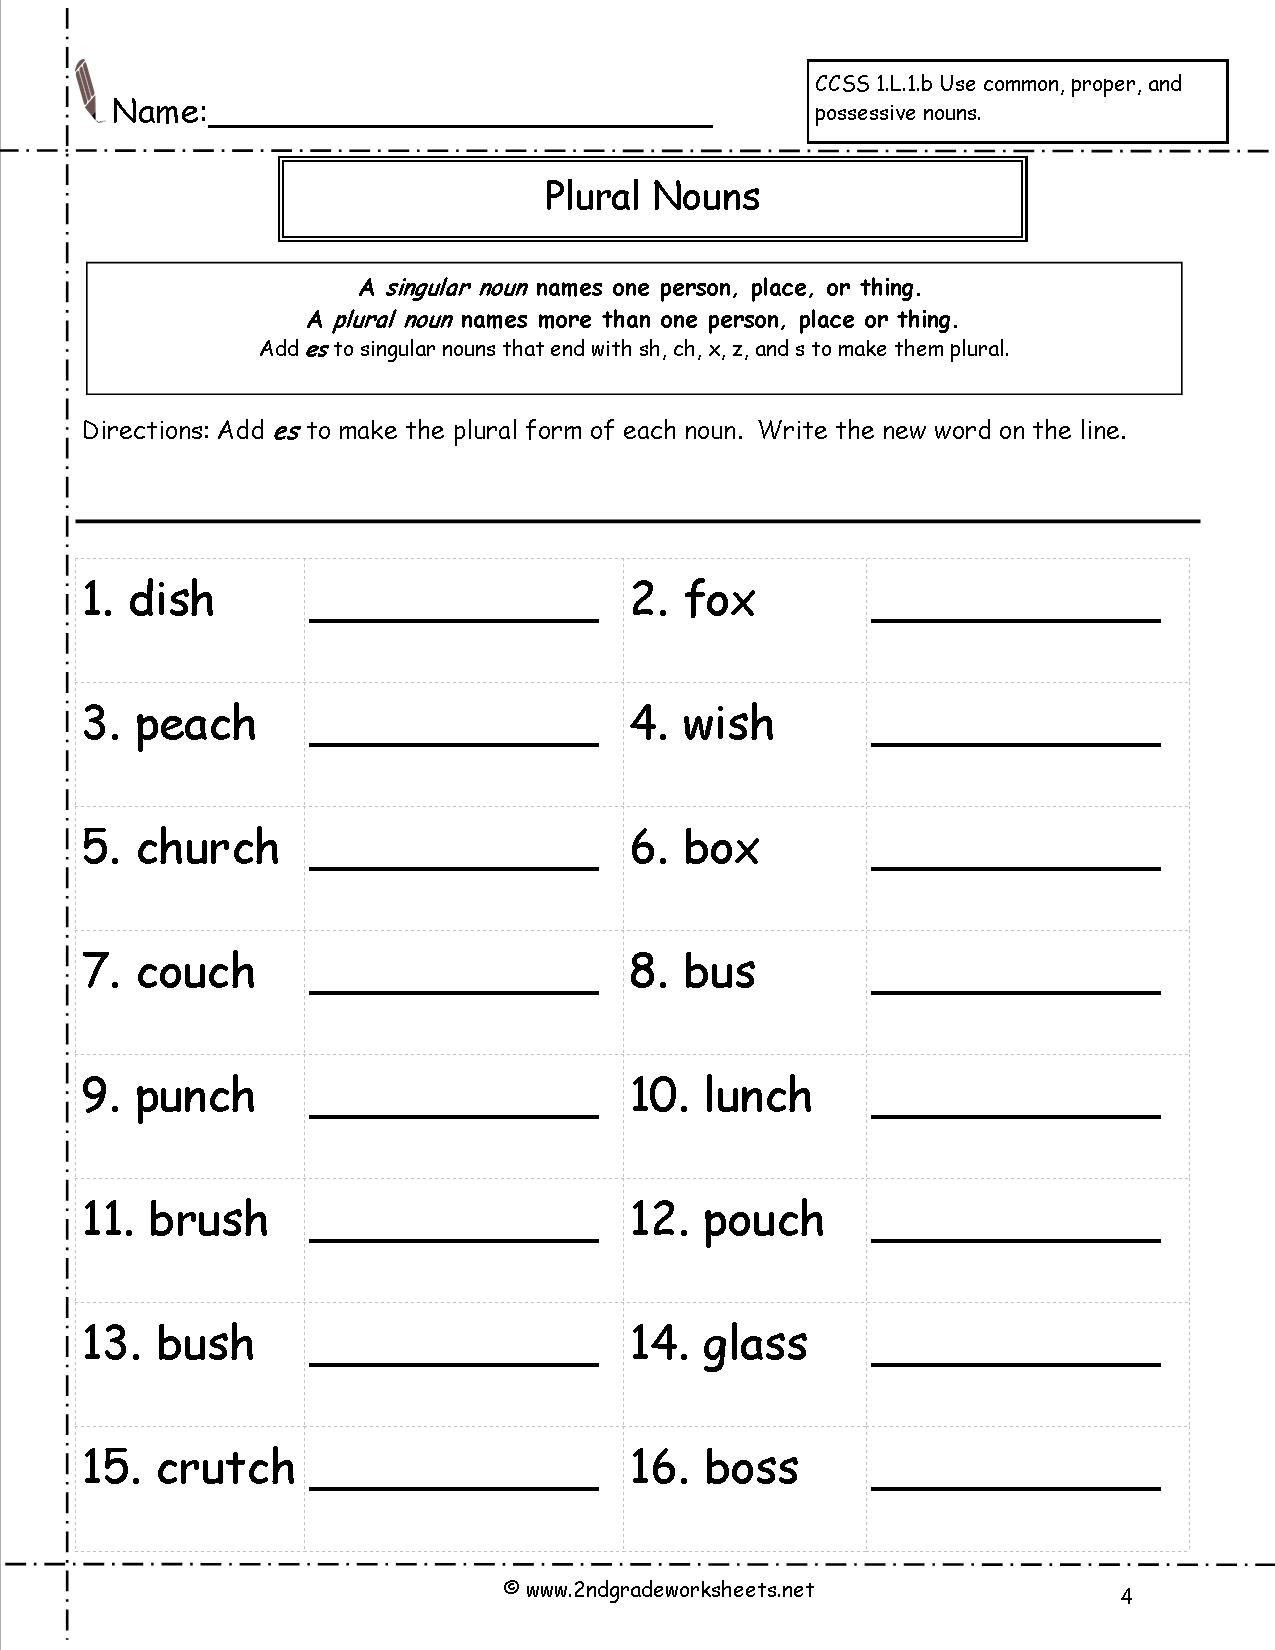 Plural Nouns Worksheet 5th Grade Singular and Plural Nouns Worksheet